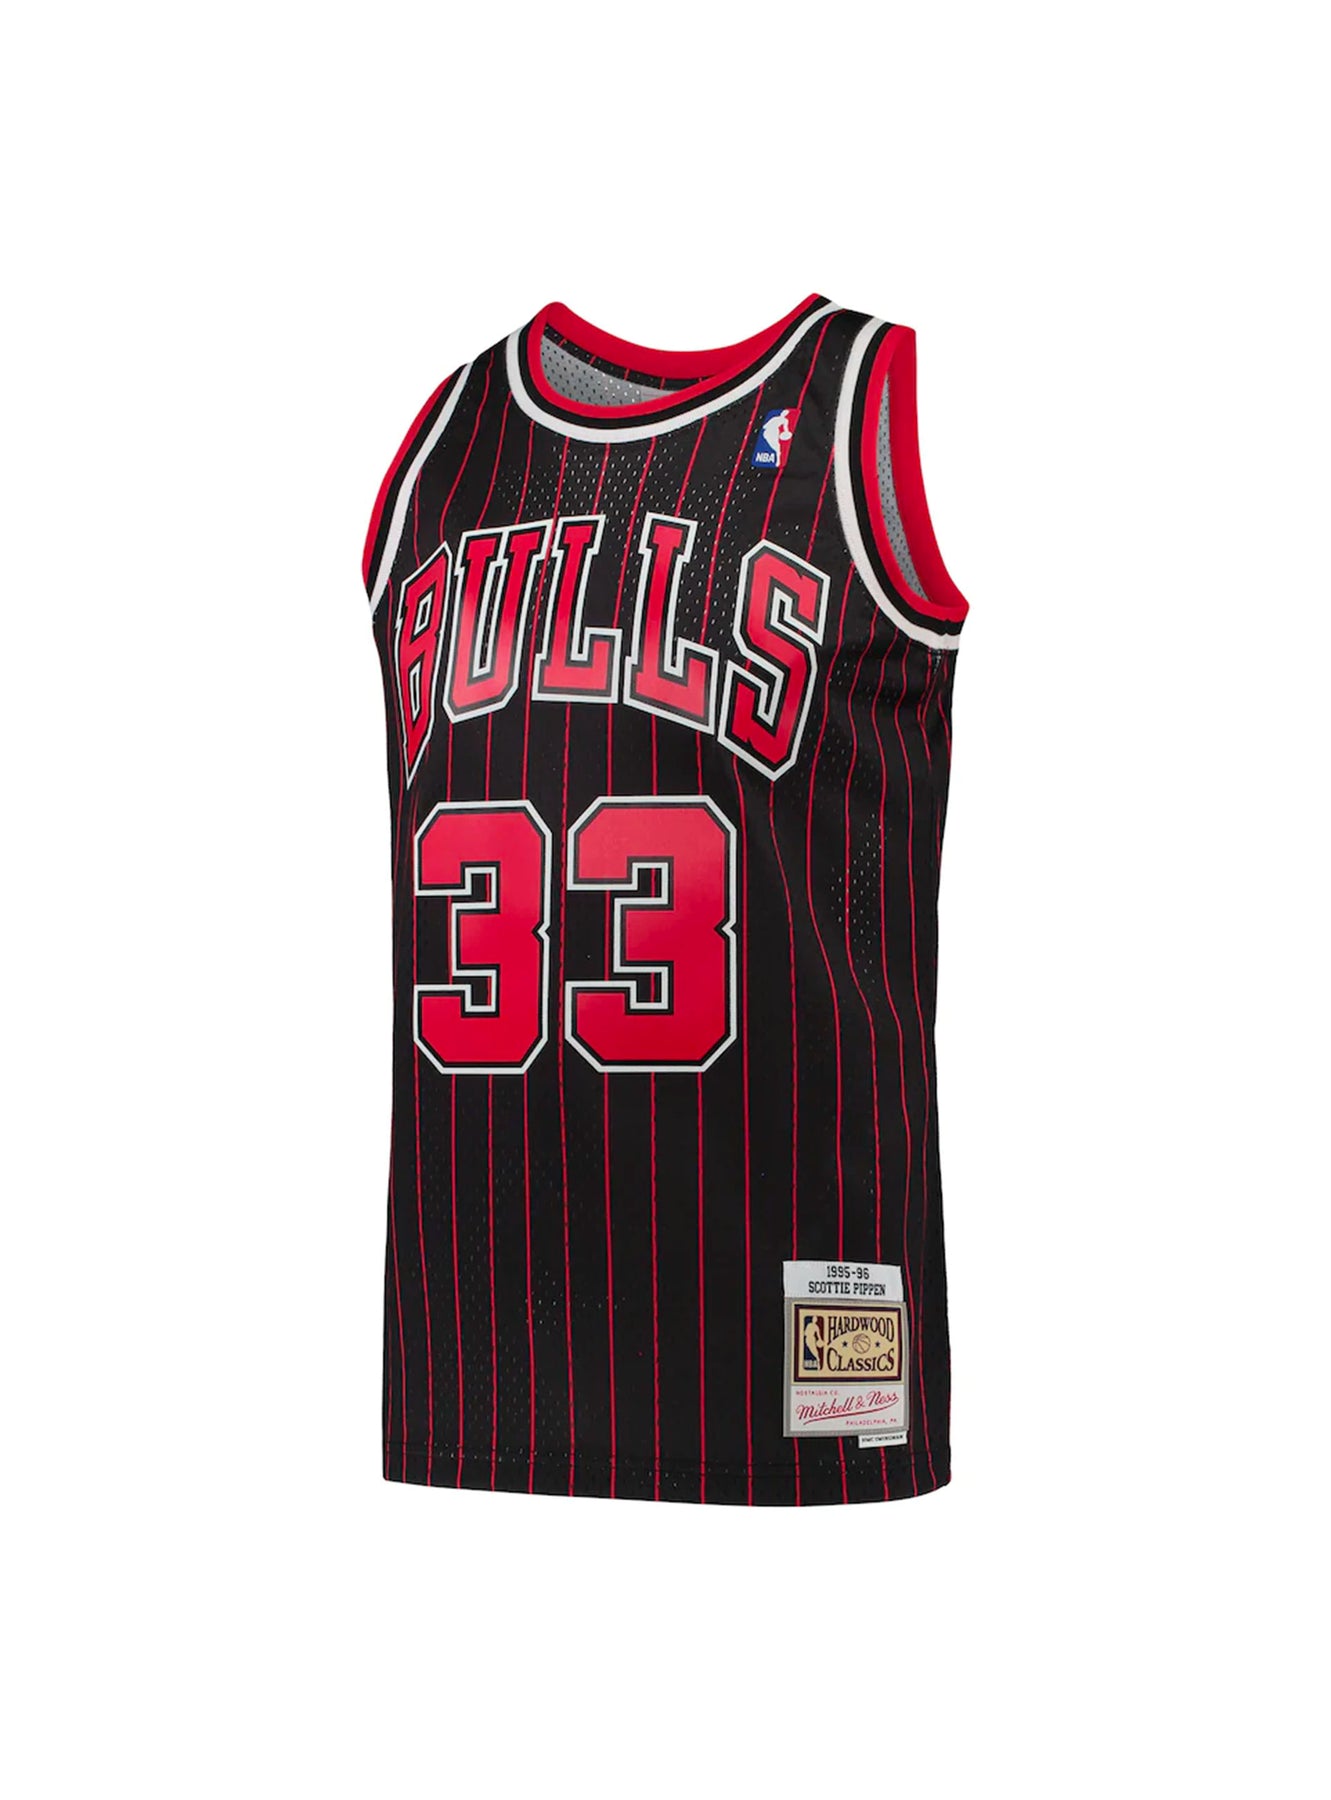 Scottie Pippen Chicago Bulls 1997/98 Neapolitan Mitchell & Ness Swingman Jersey, XL